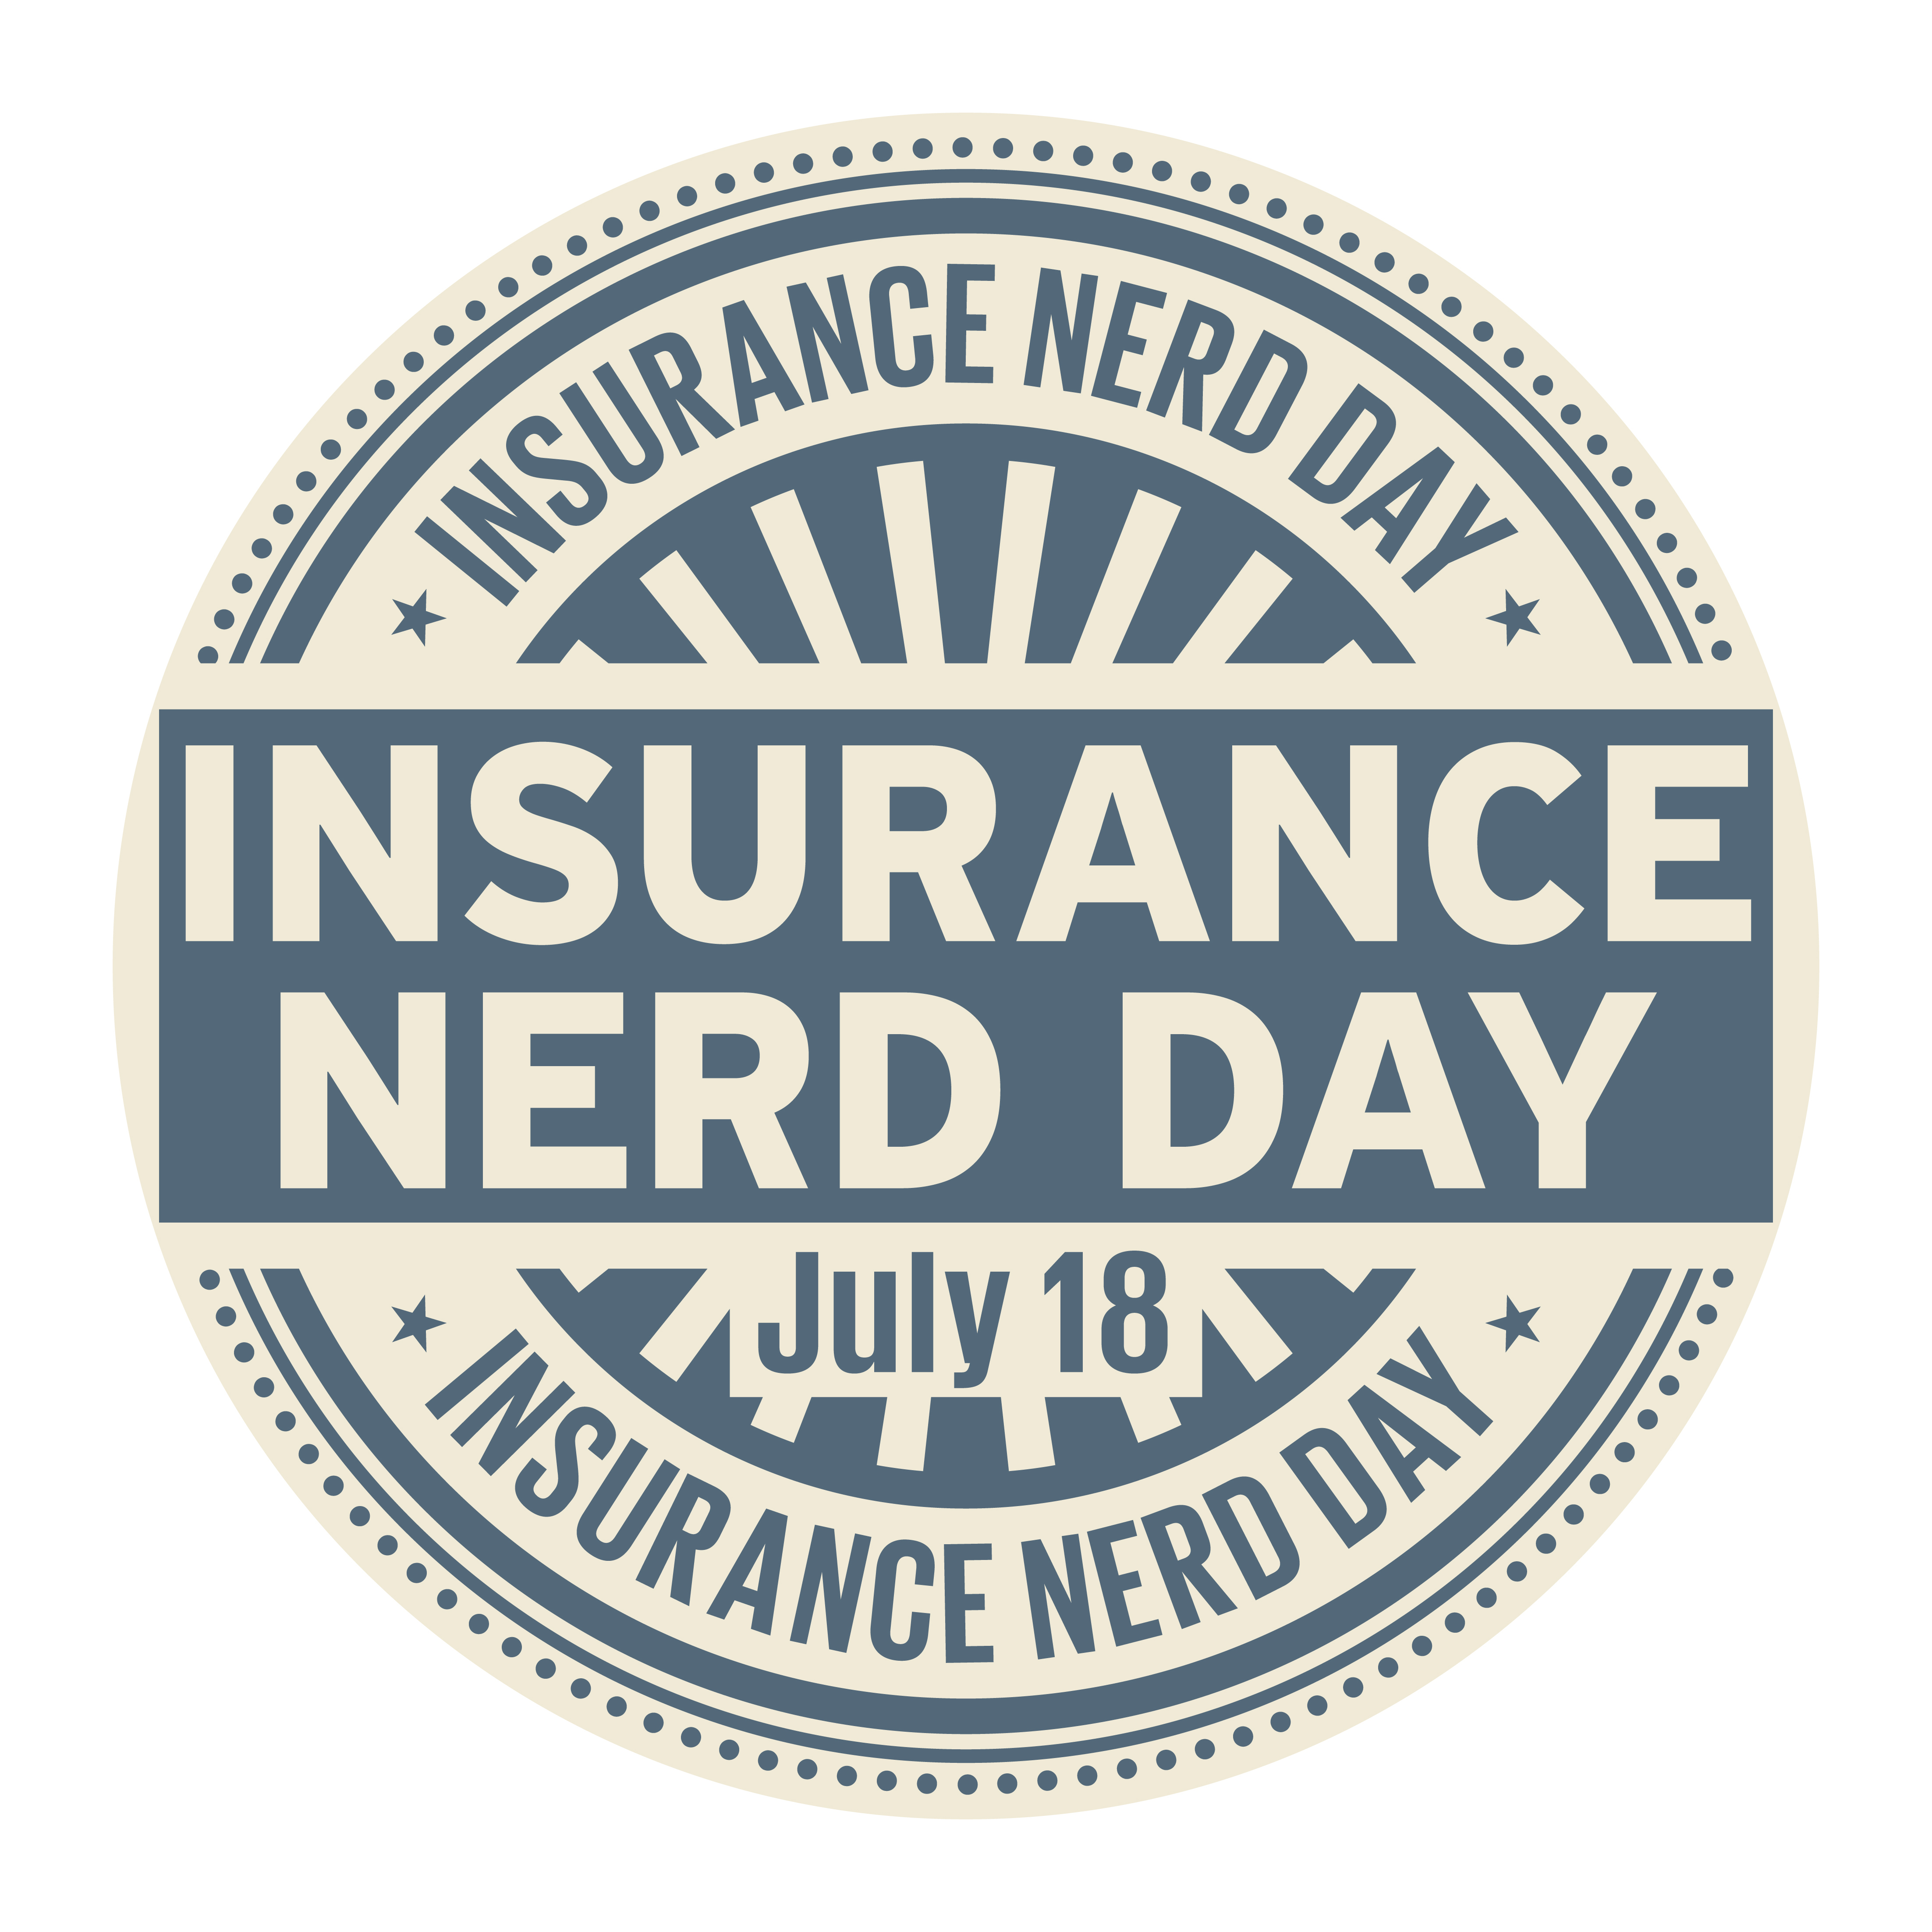 Recognizing Insurance Nerd Day